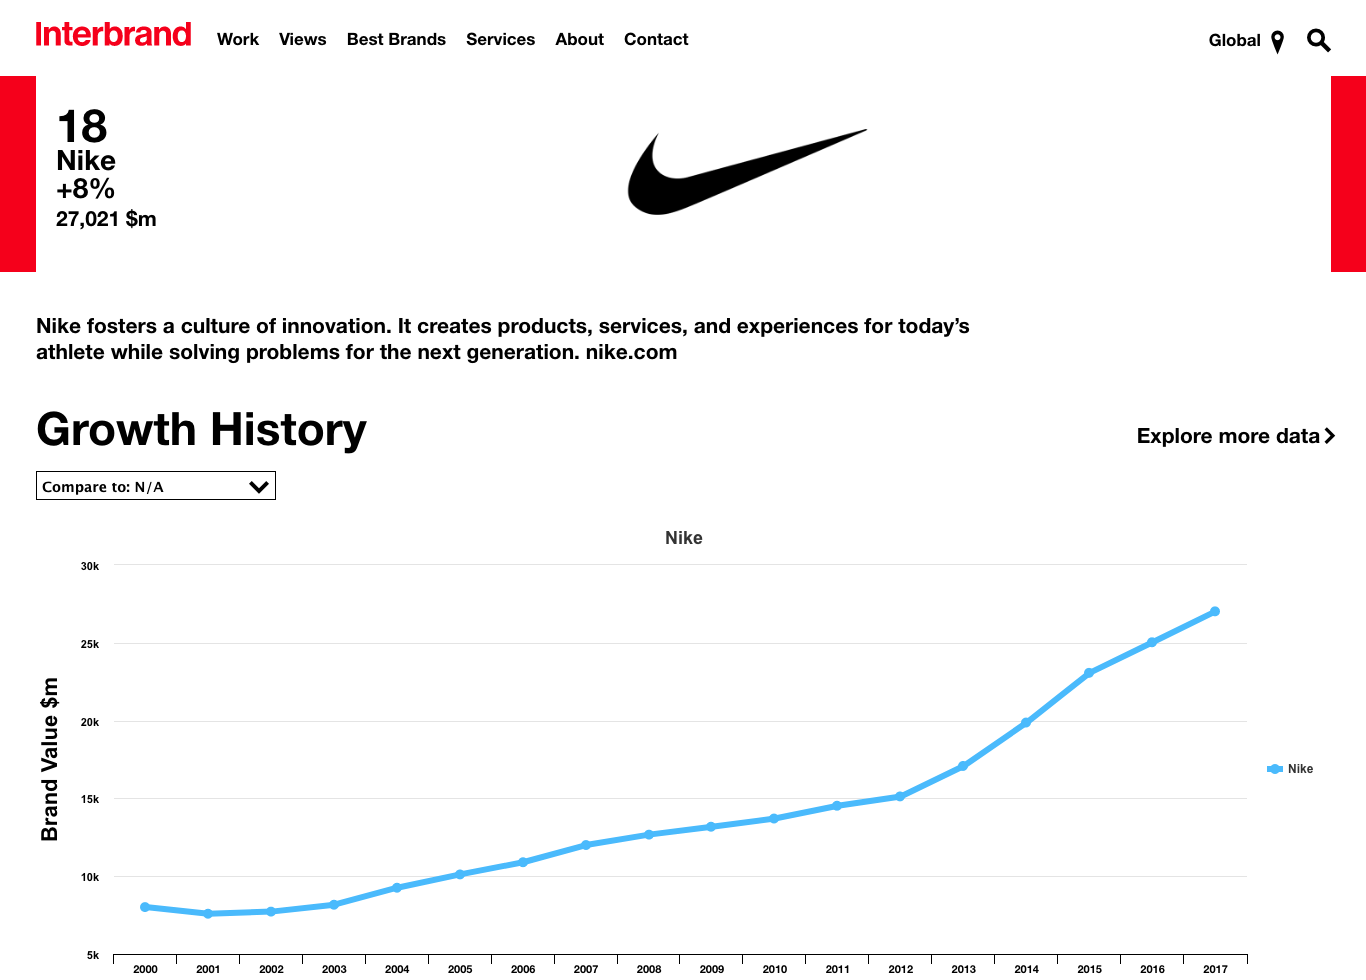 Nike crecimiento Luis Maram